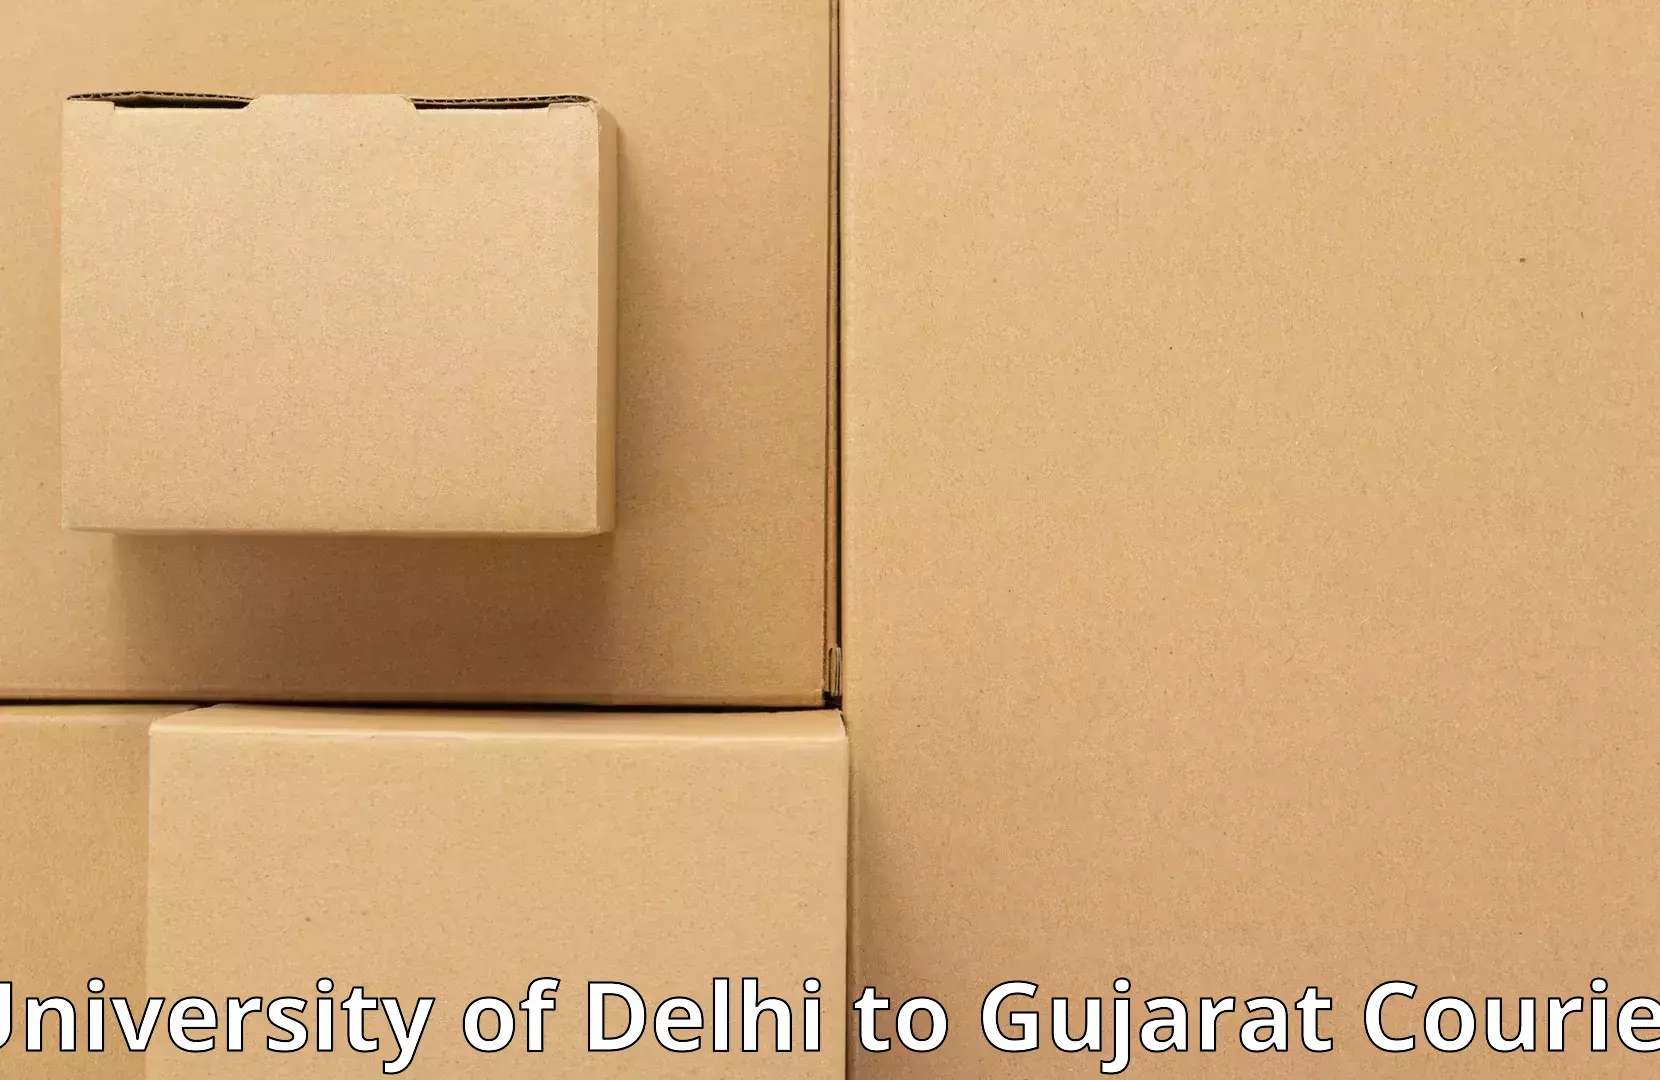 Home relocation experts University of Delhi to Gandhinagar